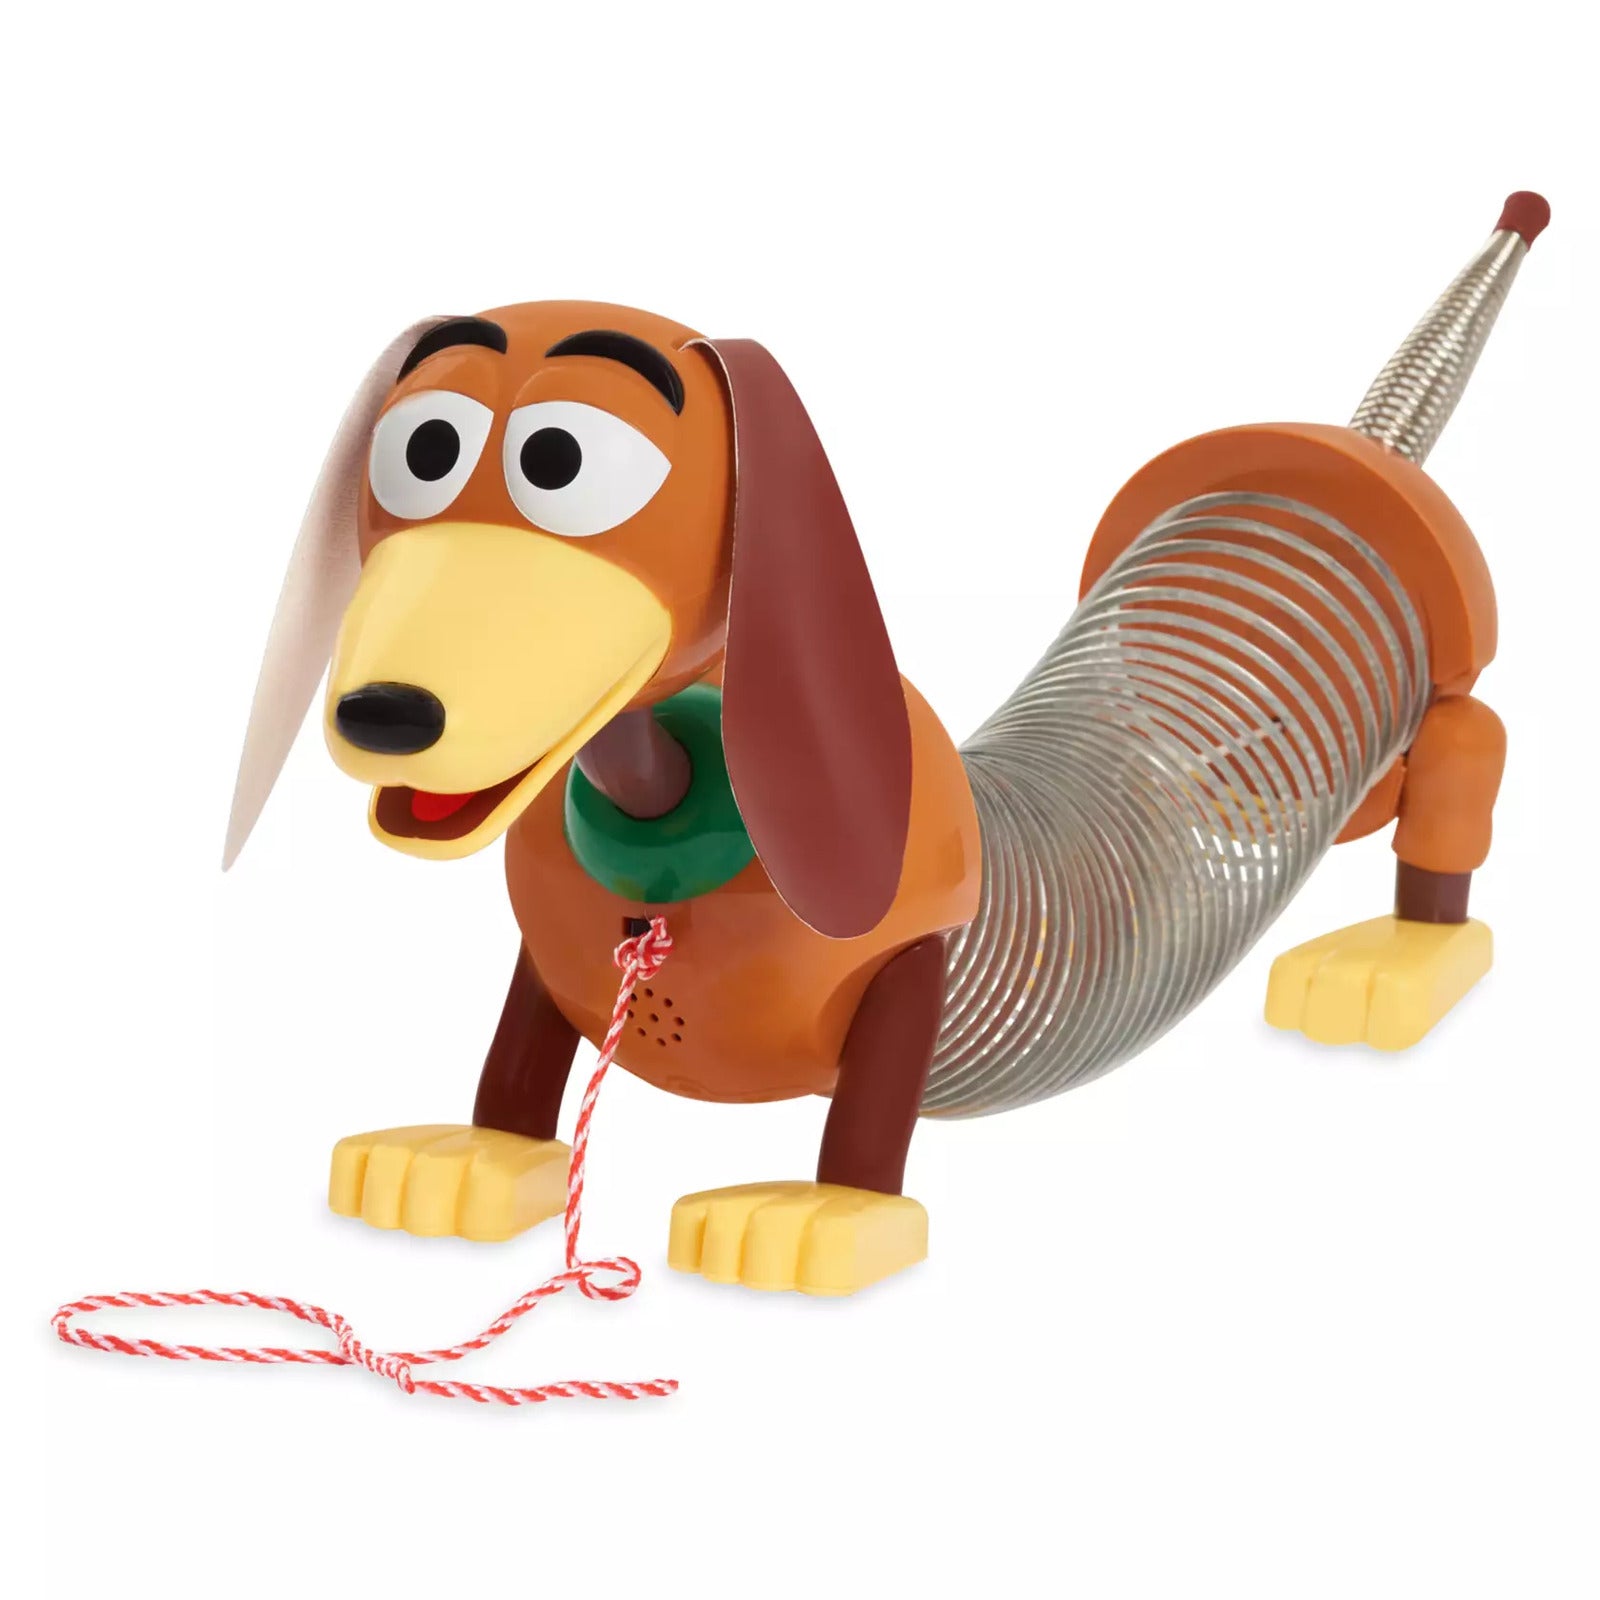 Toy Story Talking Action Figure - Slinky Dog